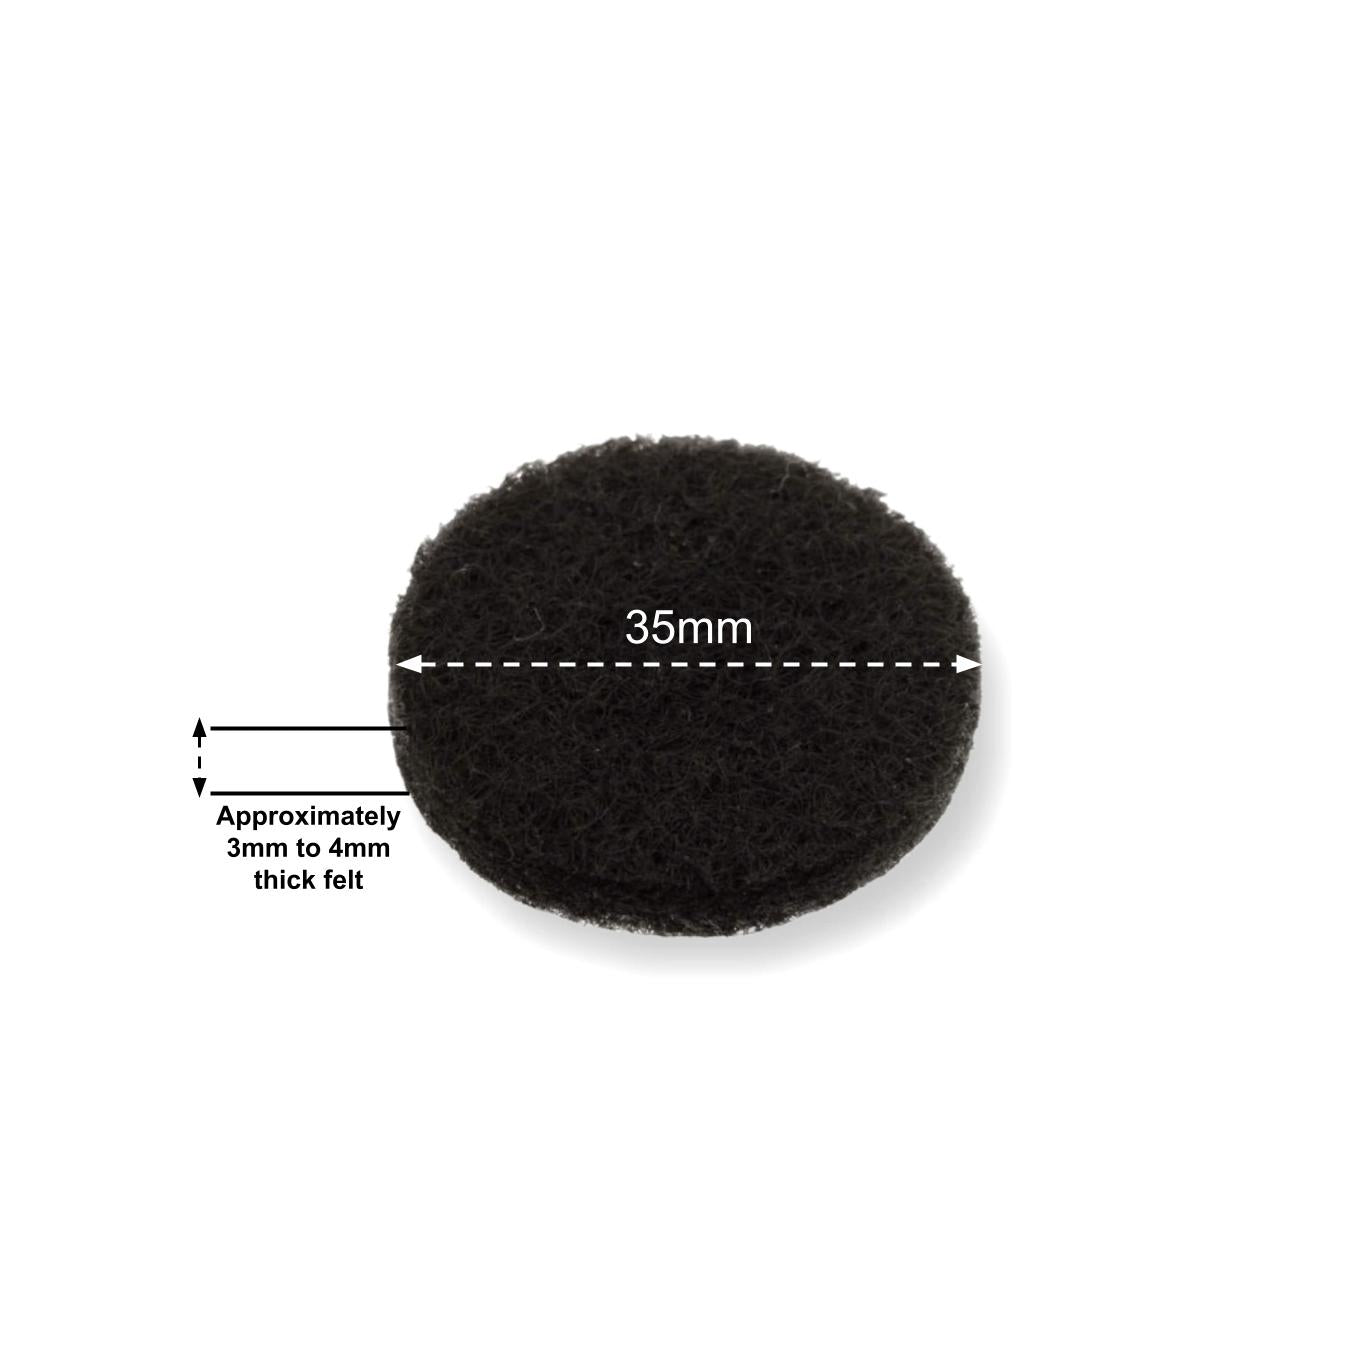 Felt Pads - Dark Brown Self Adhesive Stick on Felt - Round 35mm Diameter - Made in Germany